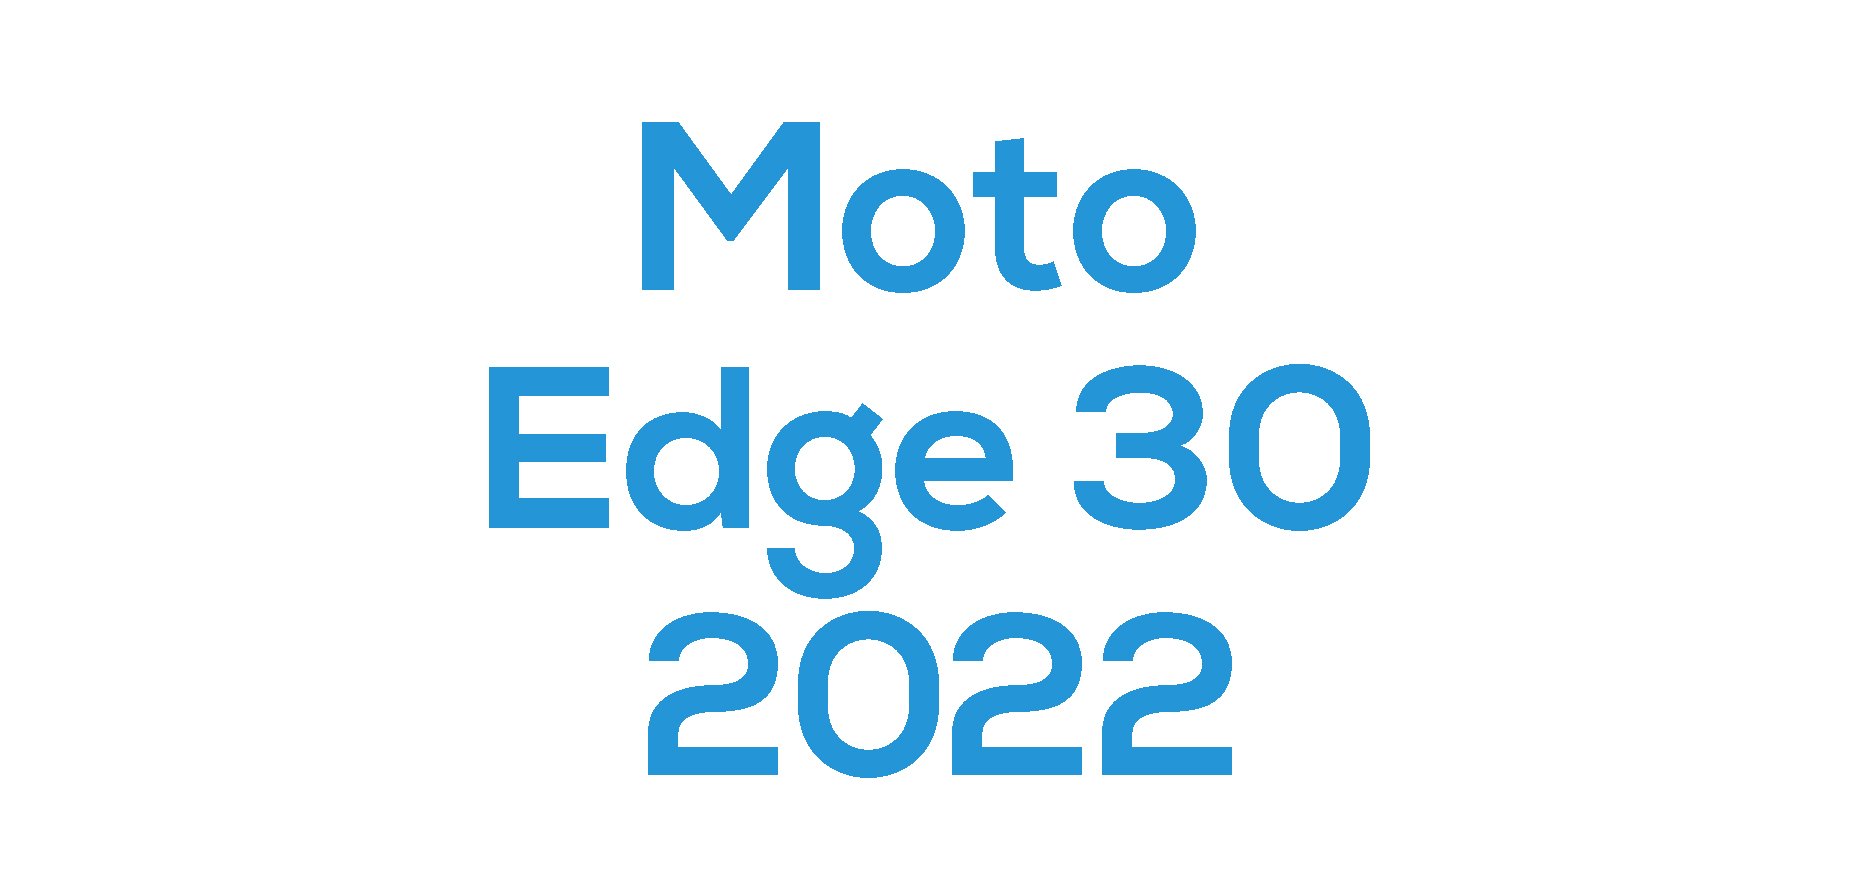 Edge 30 (2022)